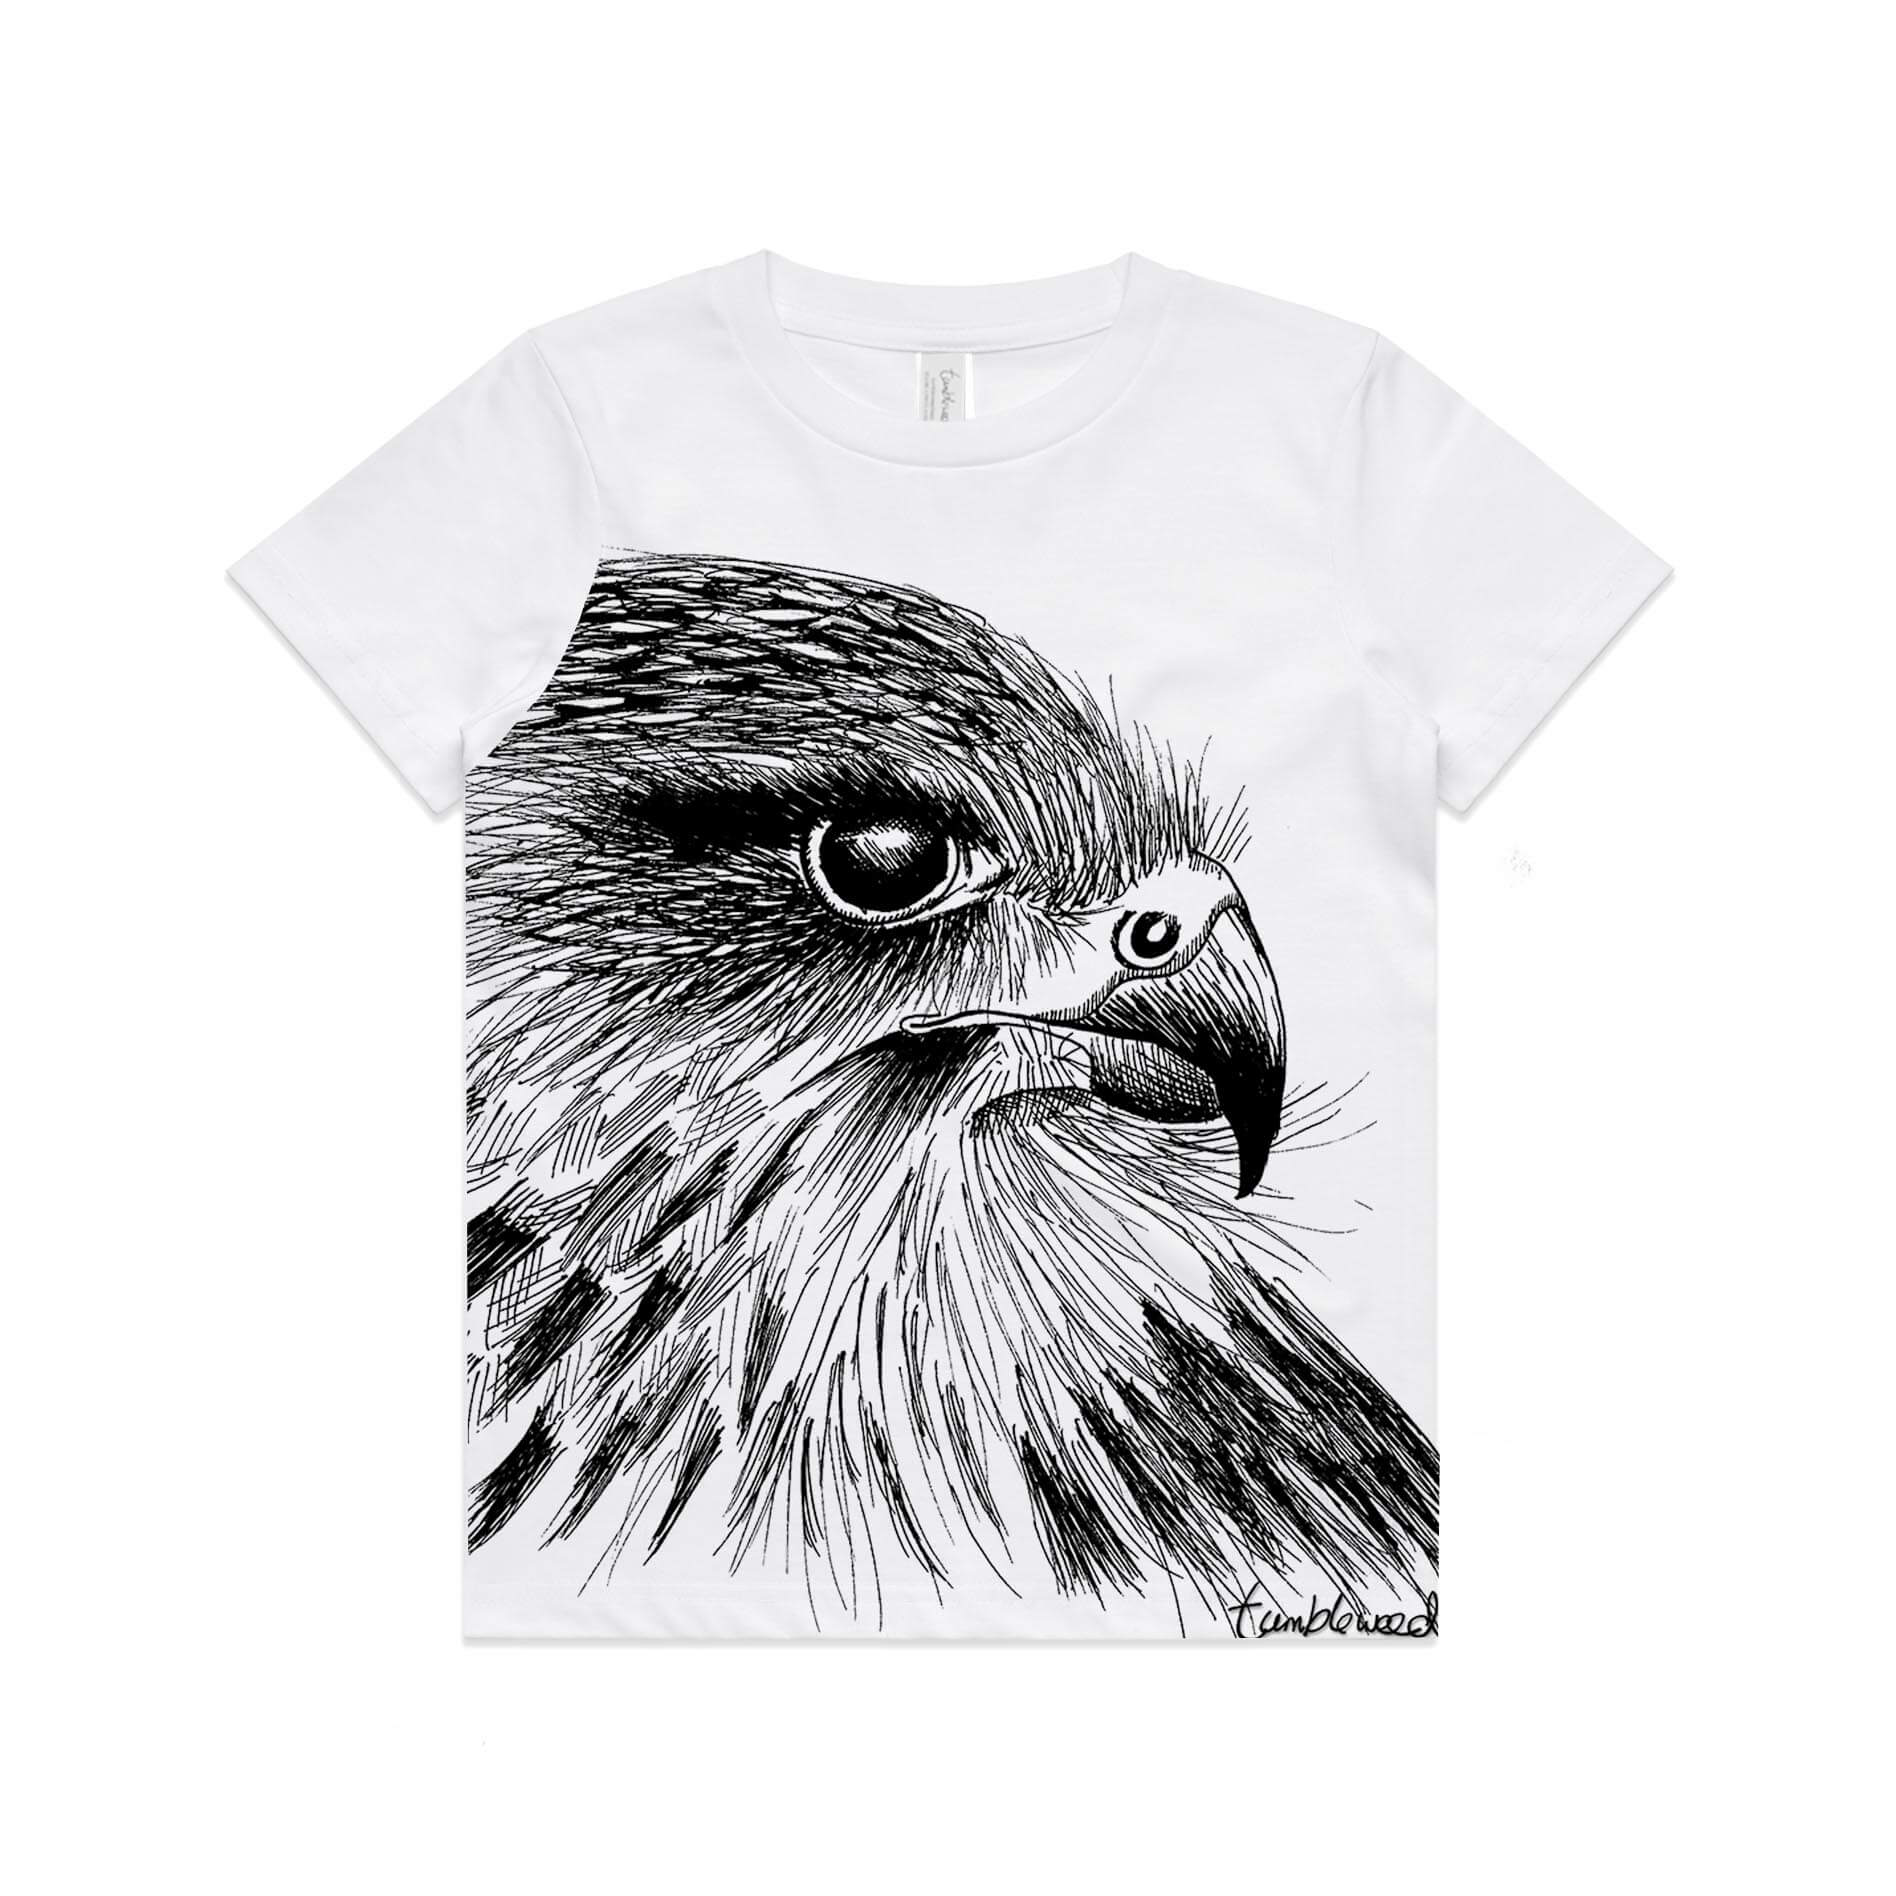 White, cotton kids' t-shirt with screen printed Kids Karearea/NZ Falcon design.